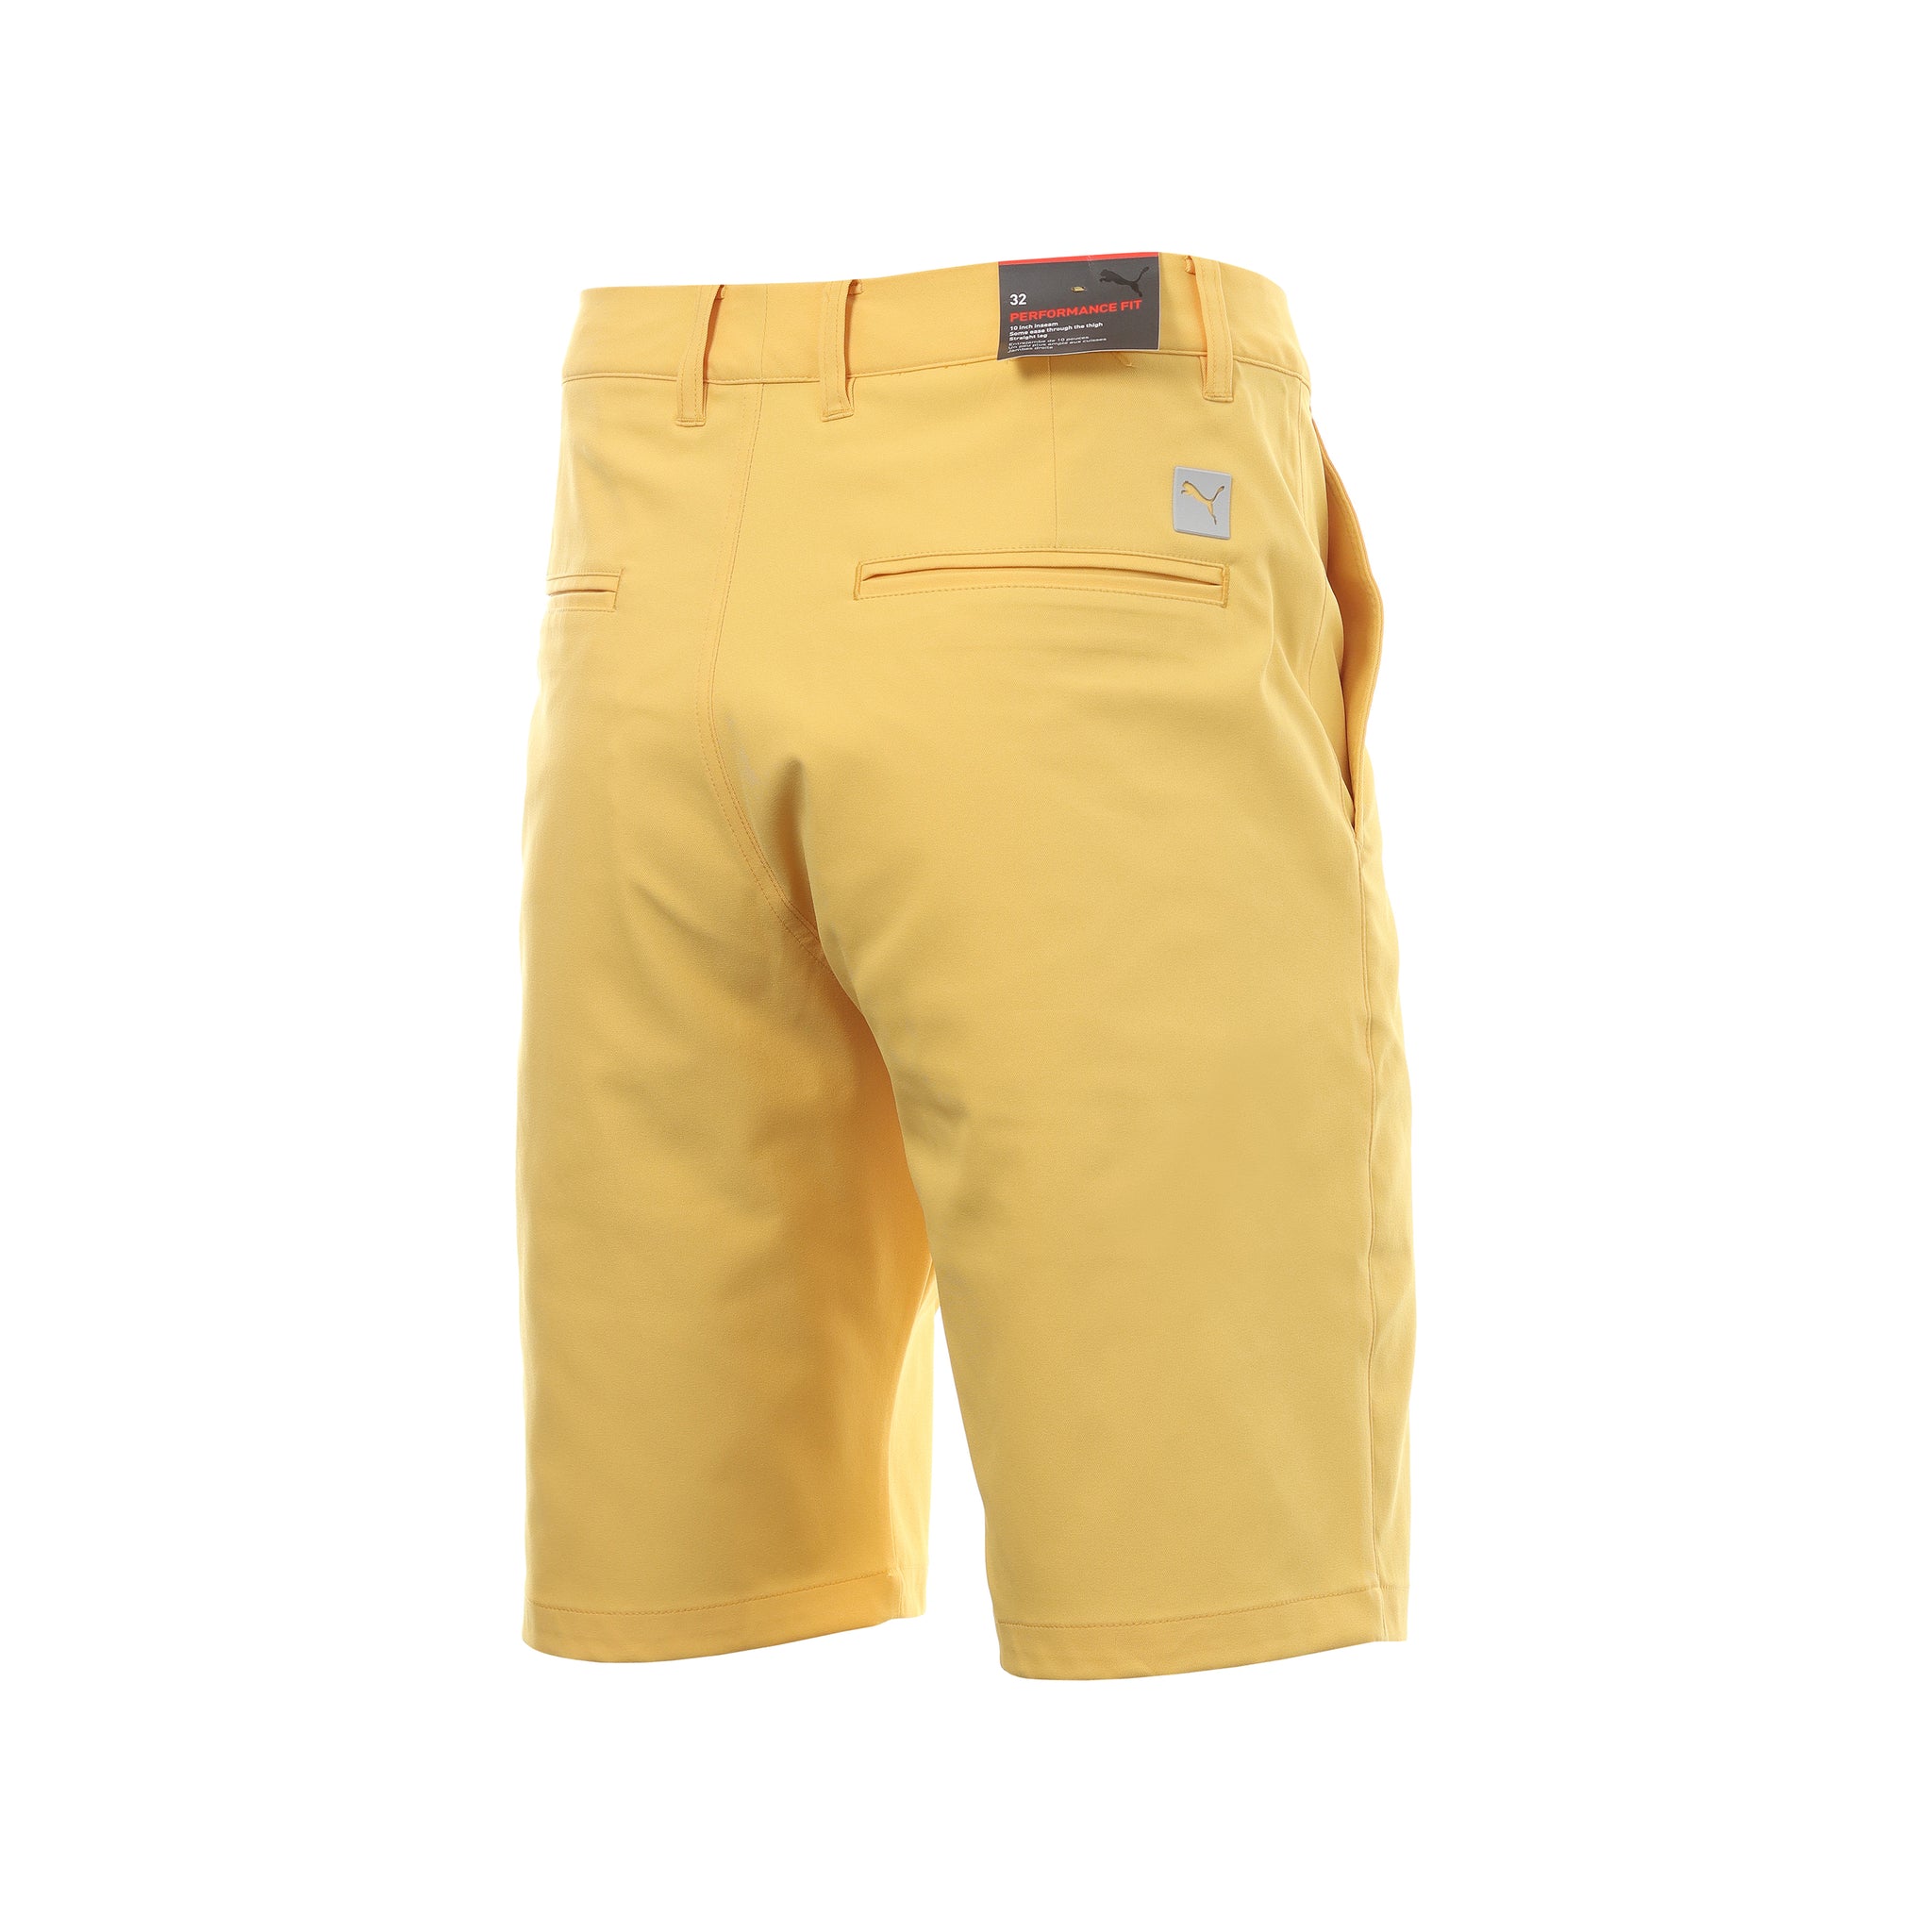 puma-golf-jackpot-shorts-1-599246-mustard-seed-40